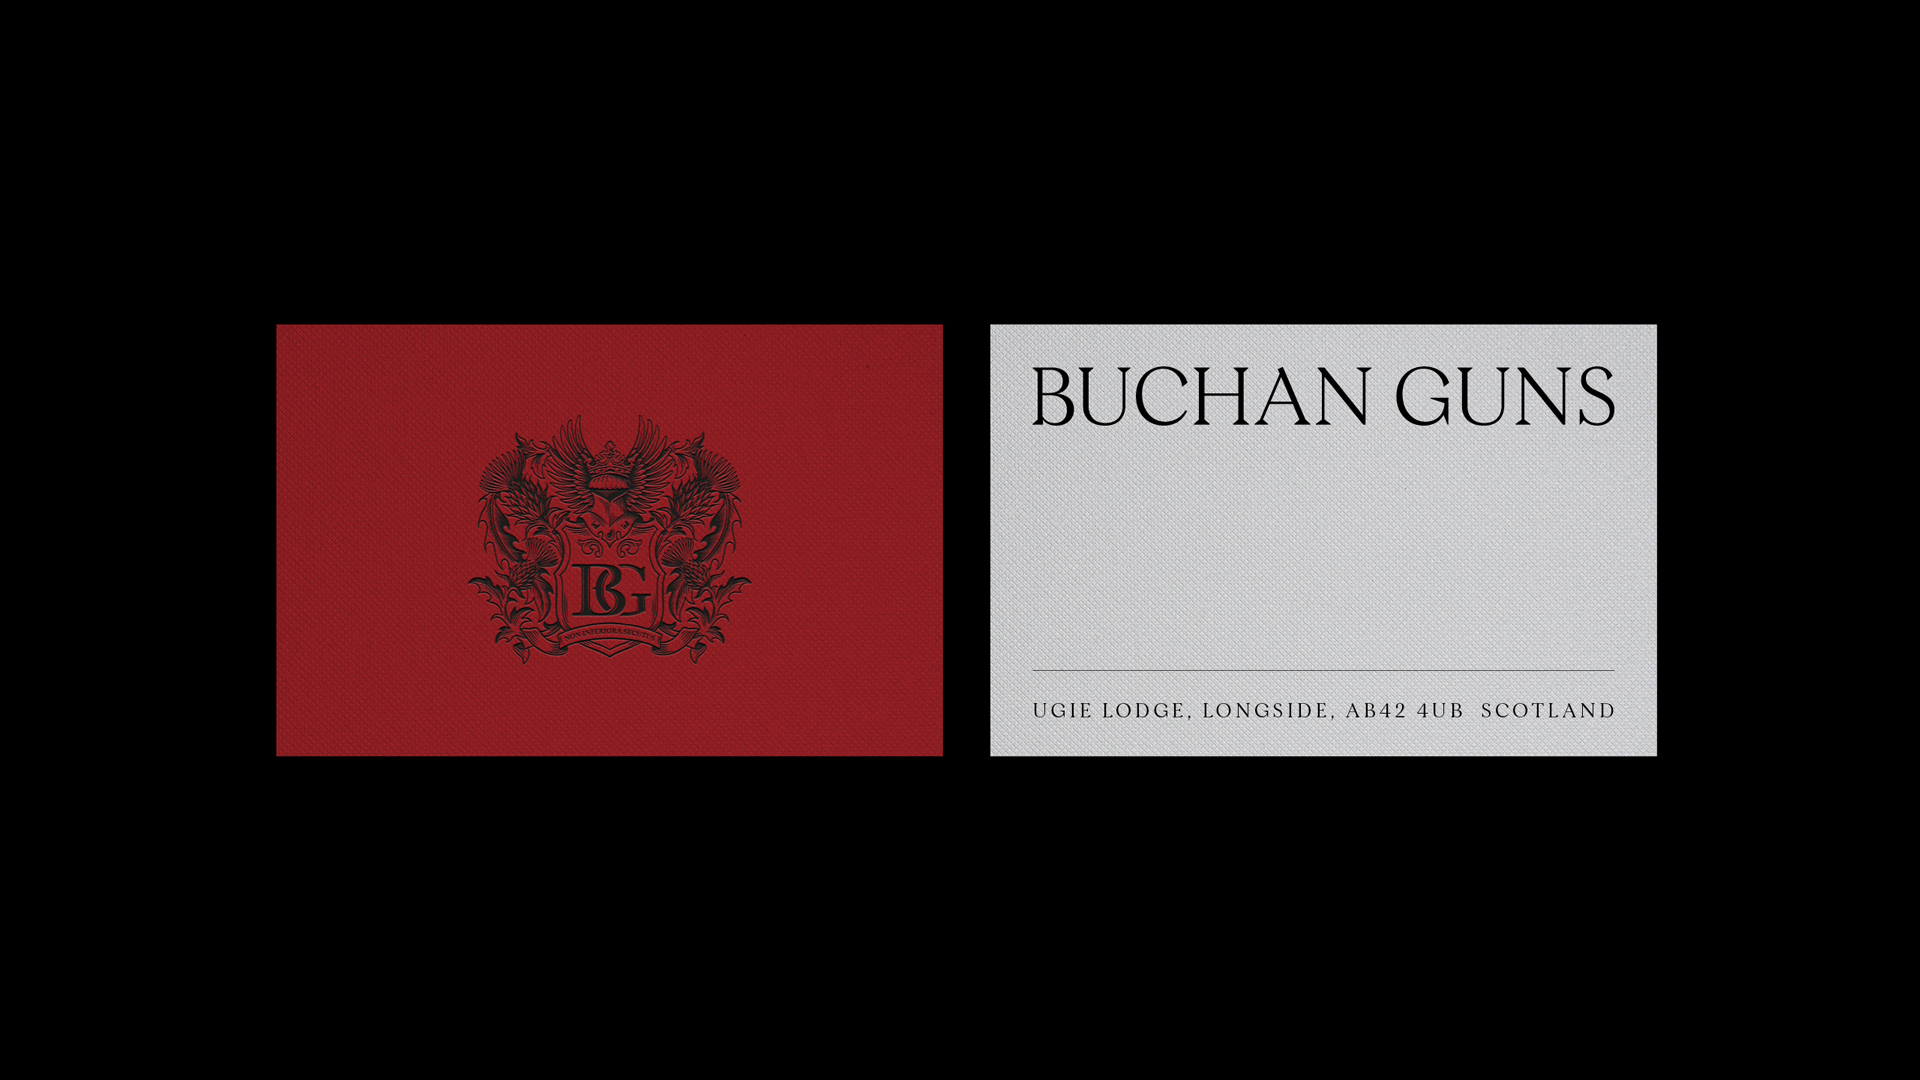 Buchan Guns